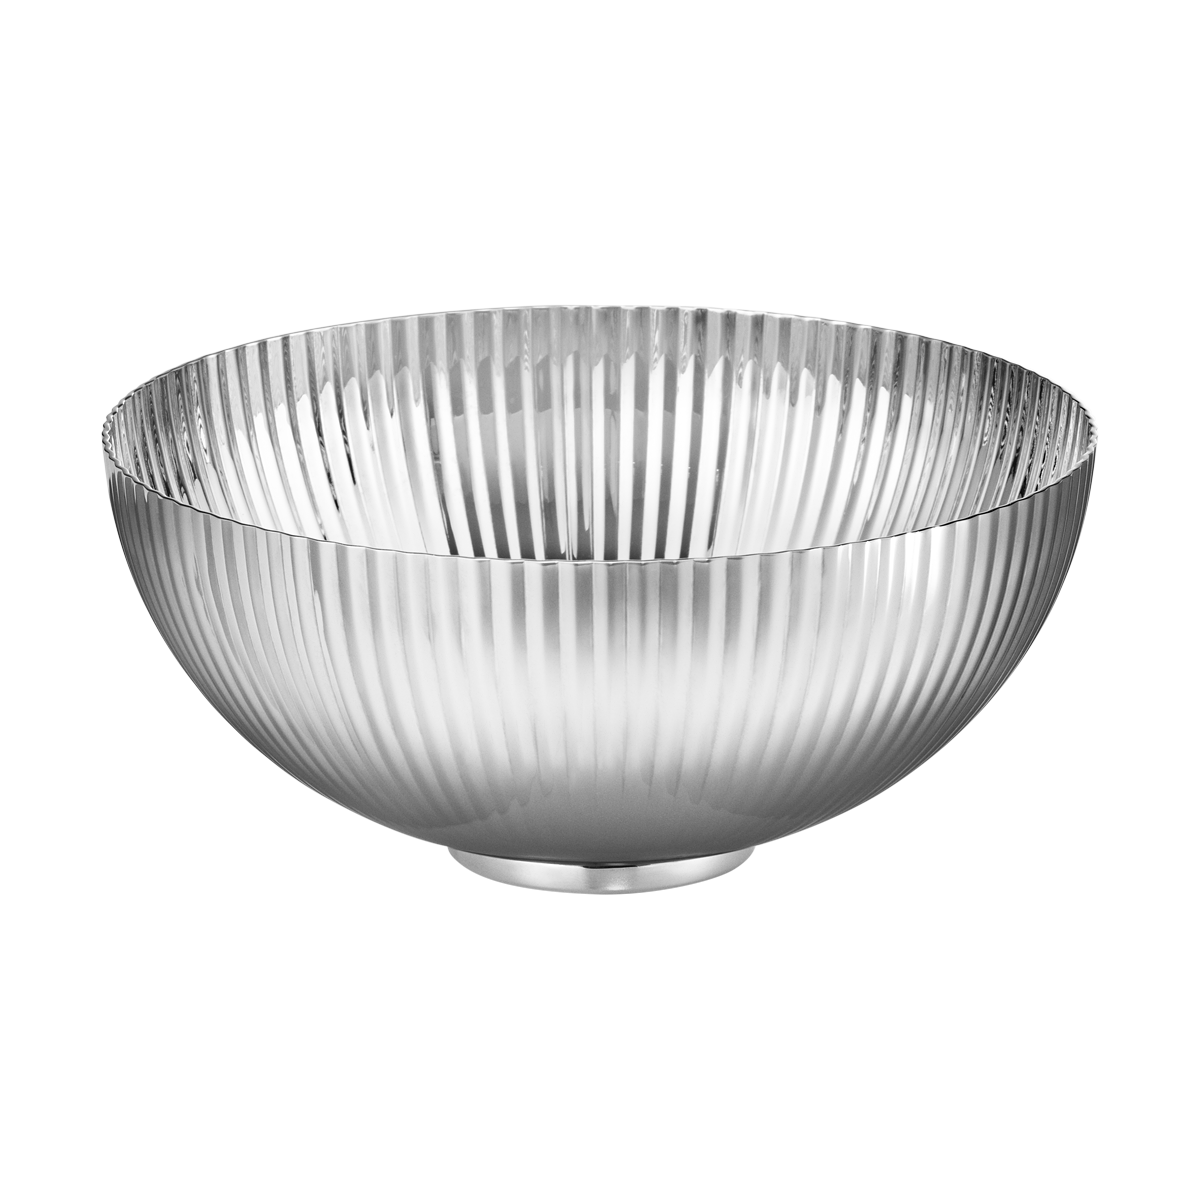 Bernadotte by Georg Jensen Stainless Steel Serving Bowl Small - New - $88.11